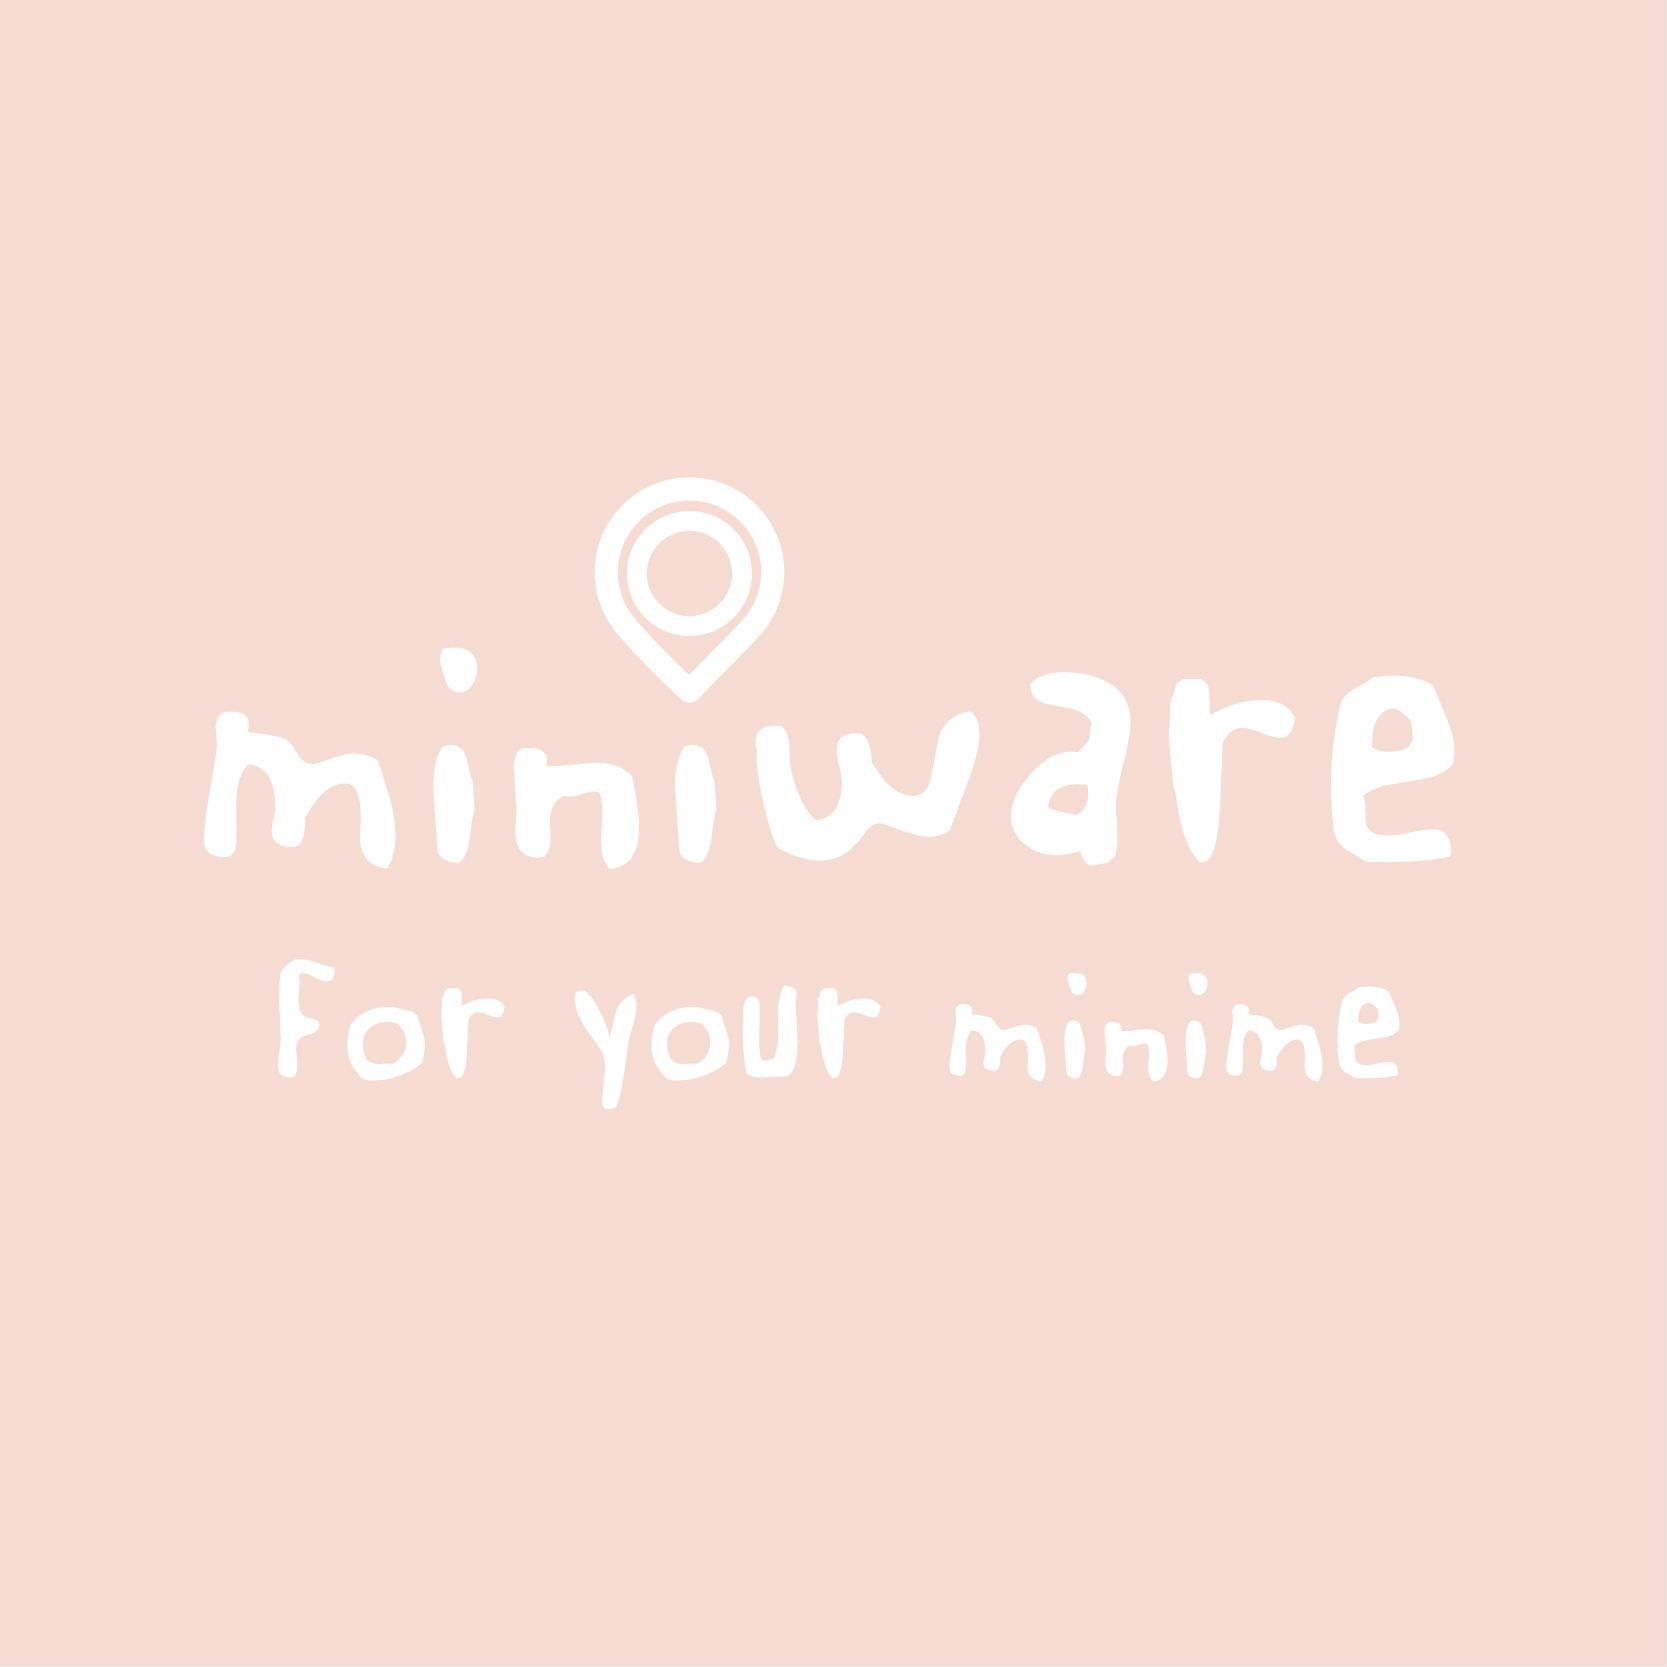 Miniware-ITOT Workbench SG Pte Ltd (202348808G)